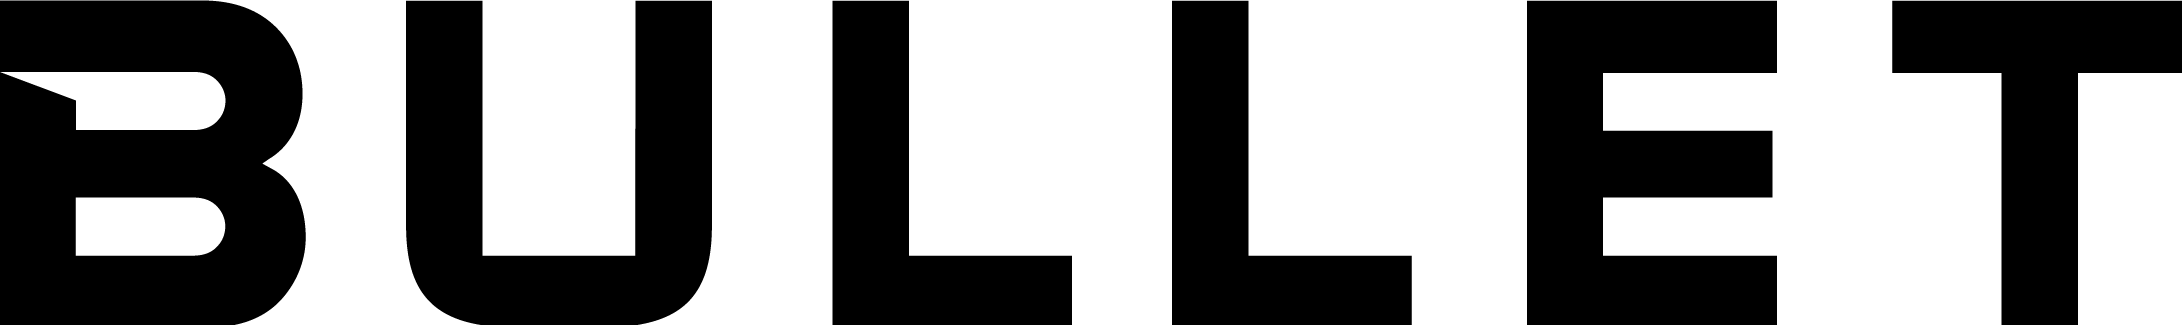 bullet logo